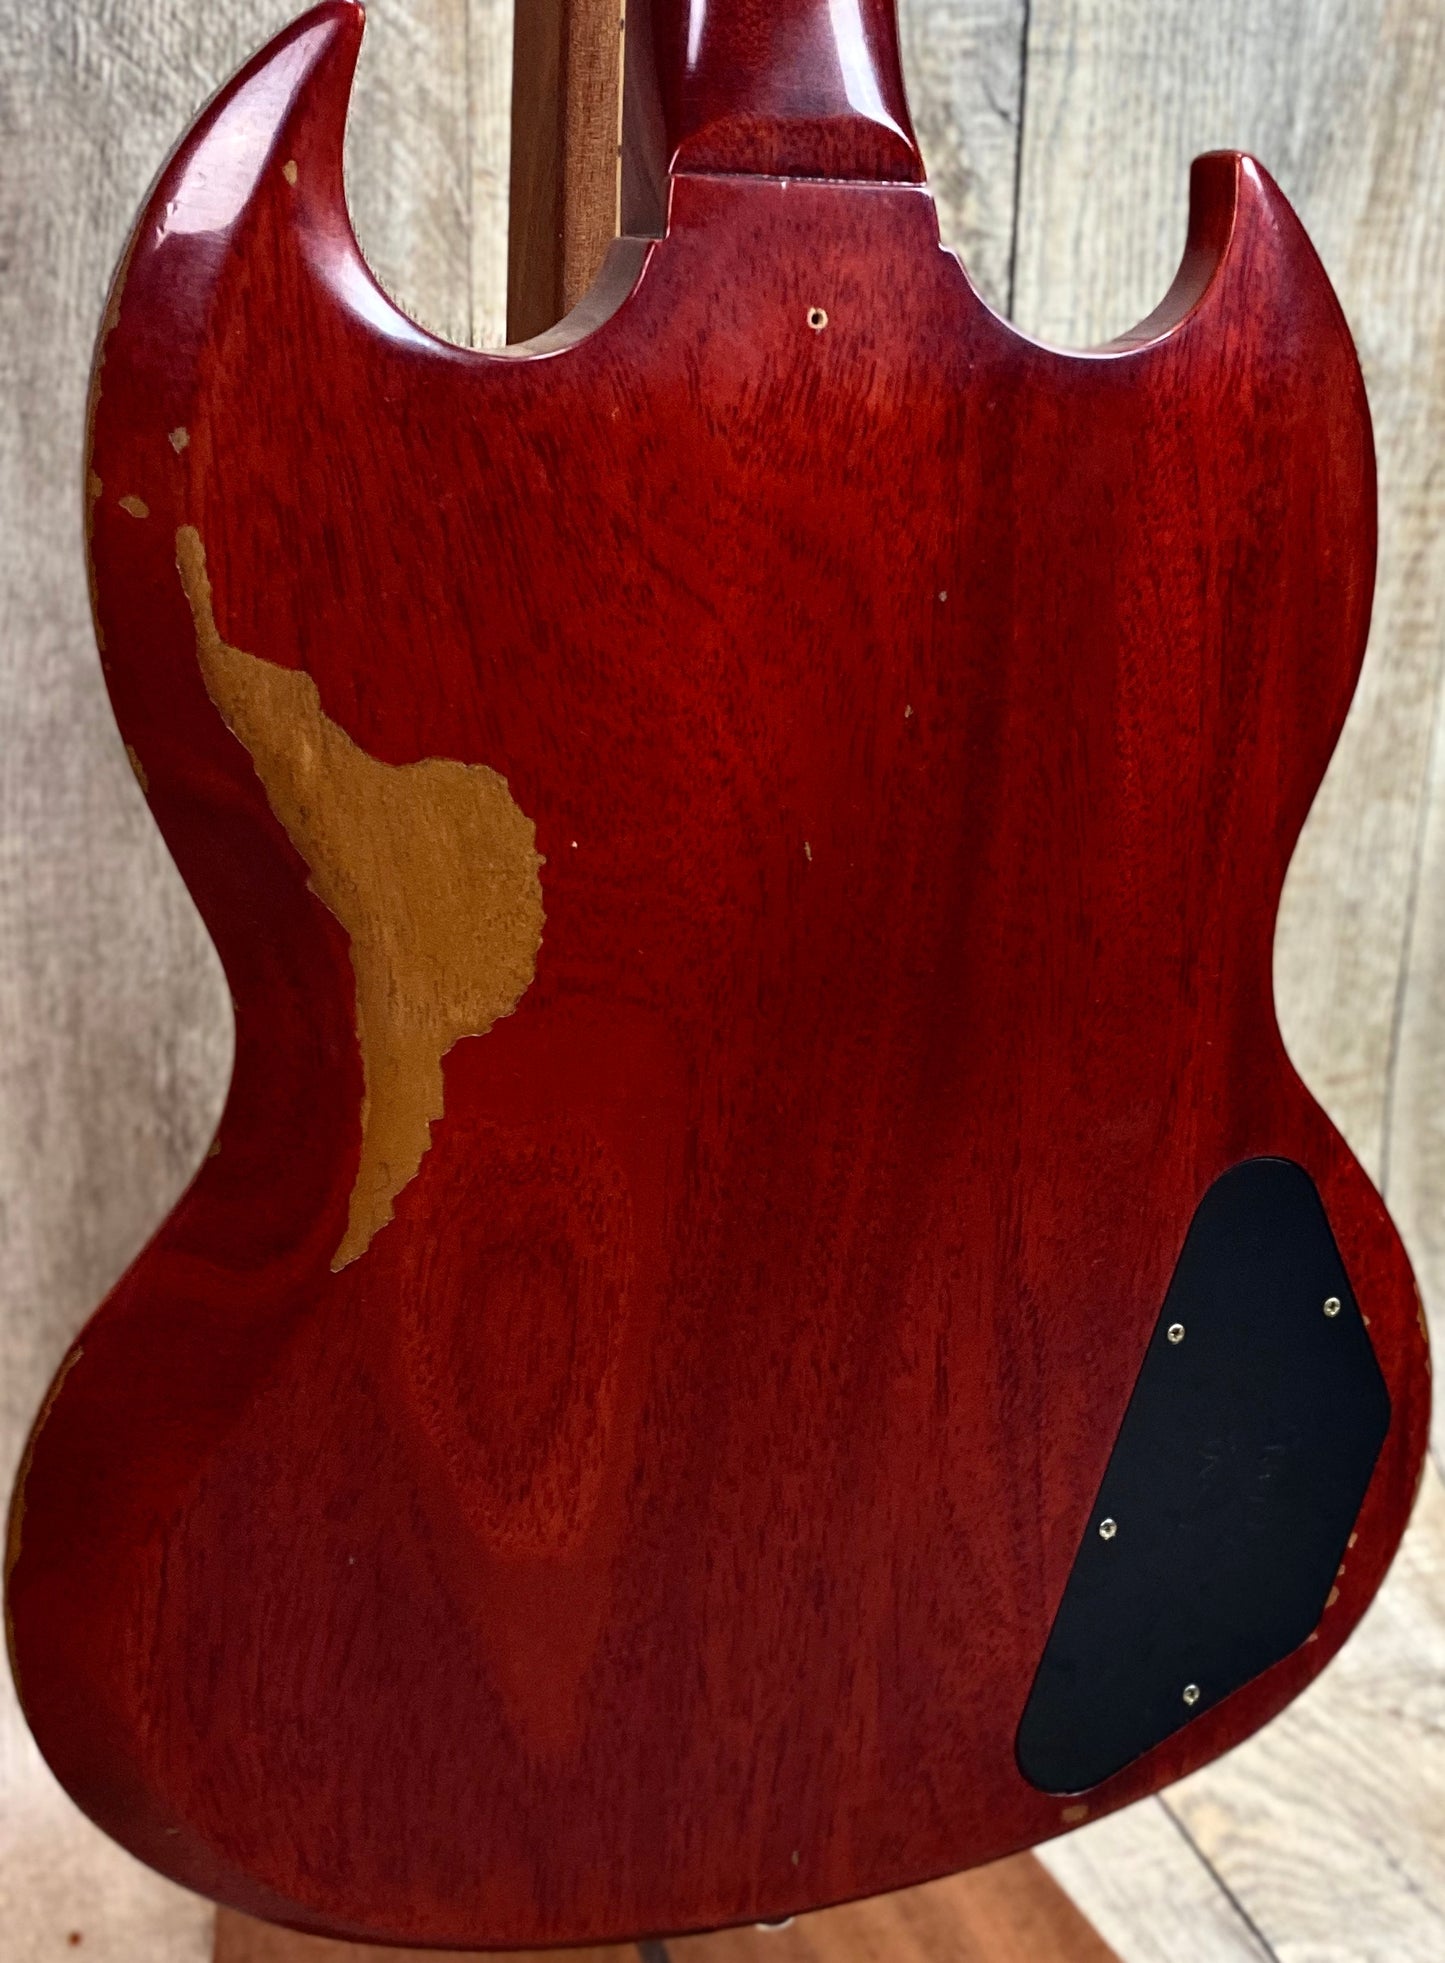 Gibson Custom Shop Tony Iommi Monkey 1964 SG Special Replica Left Hand w/case Serial #2